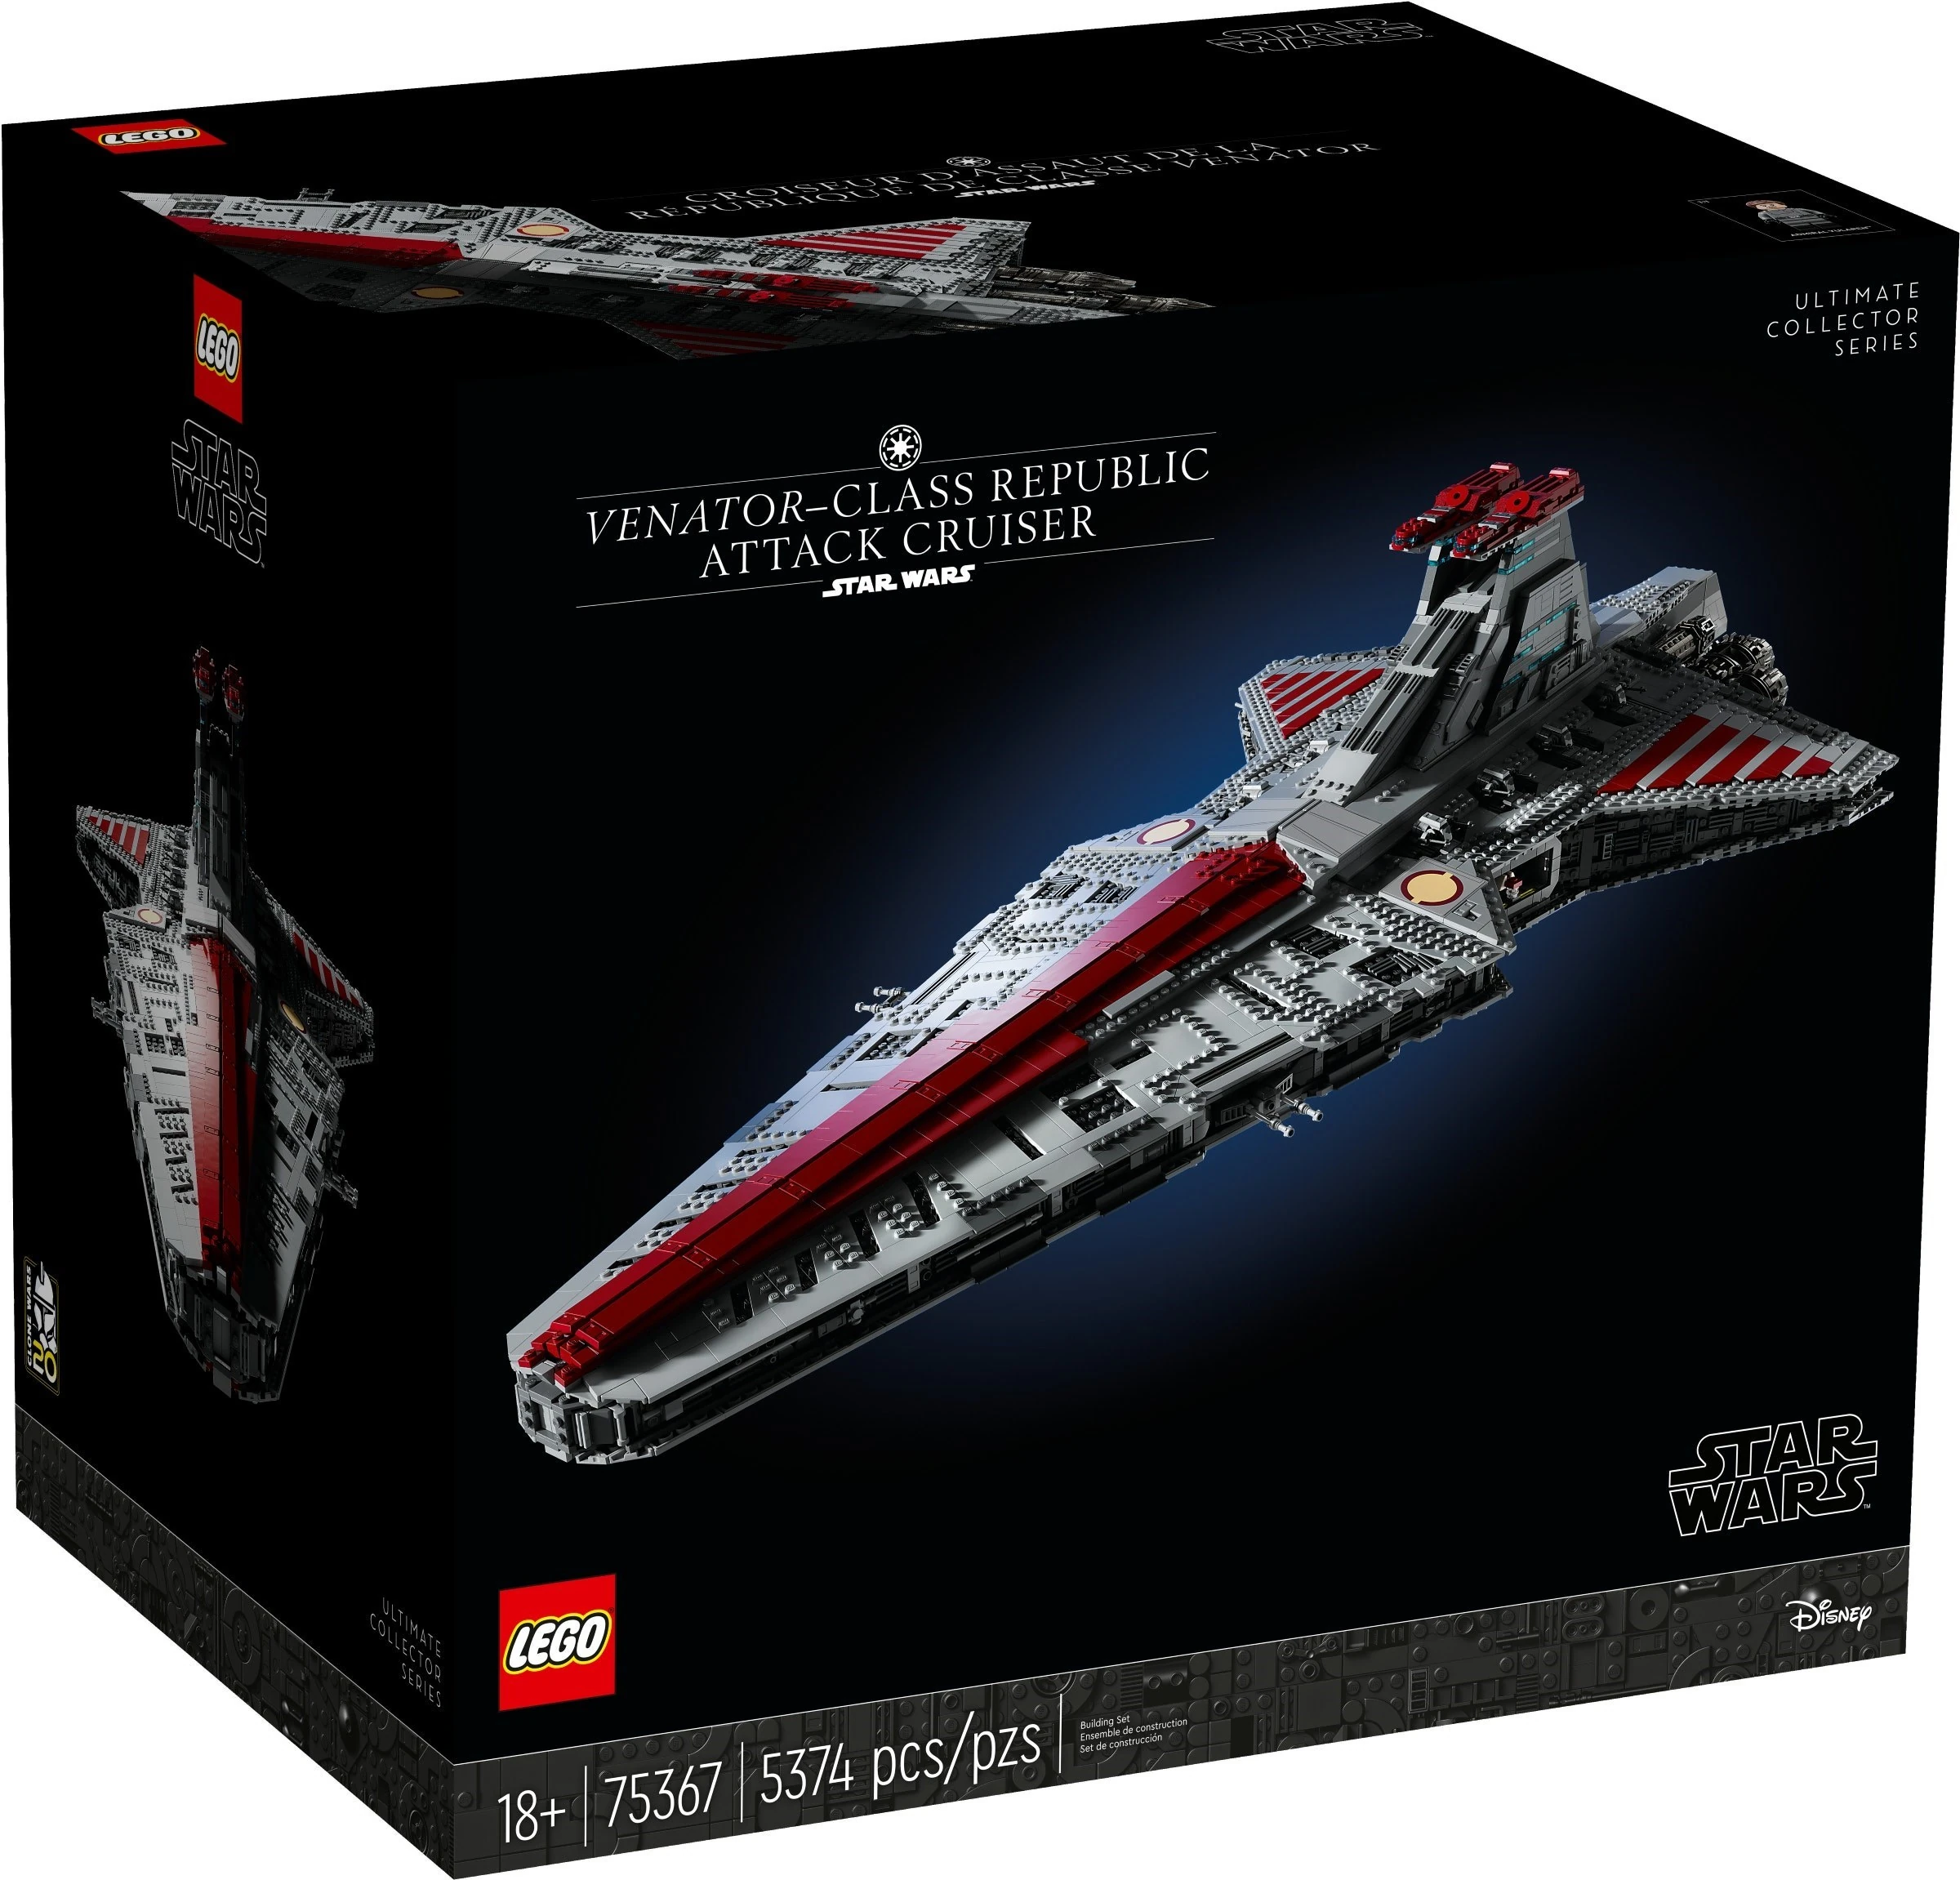 Display Stand for Lego Star Wars 8039 Venator-class Republic Attack Cruiser  